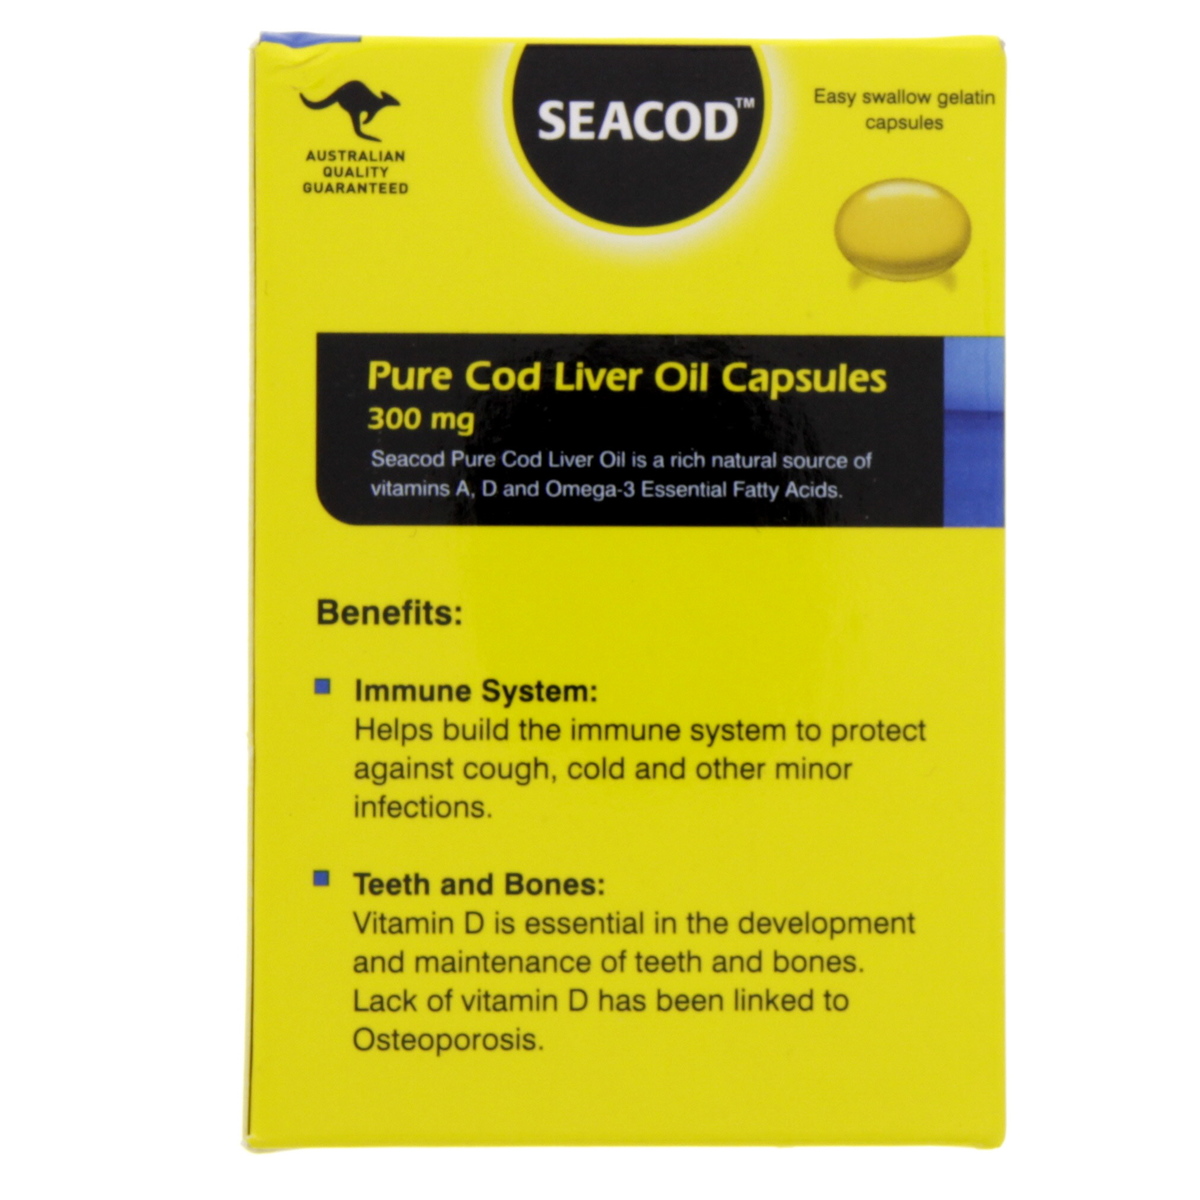 Oil benefits liver cod 11 Benefits